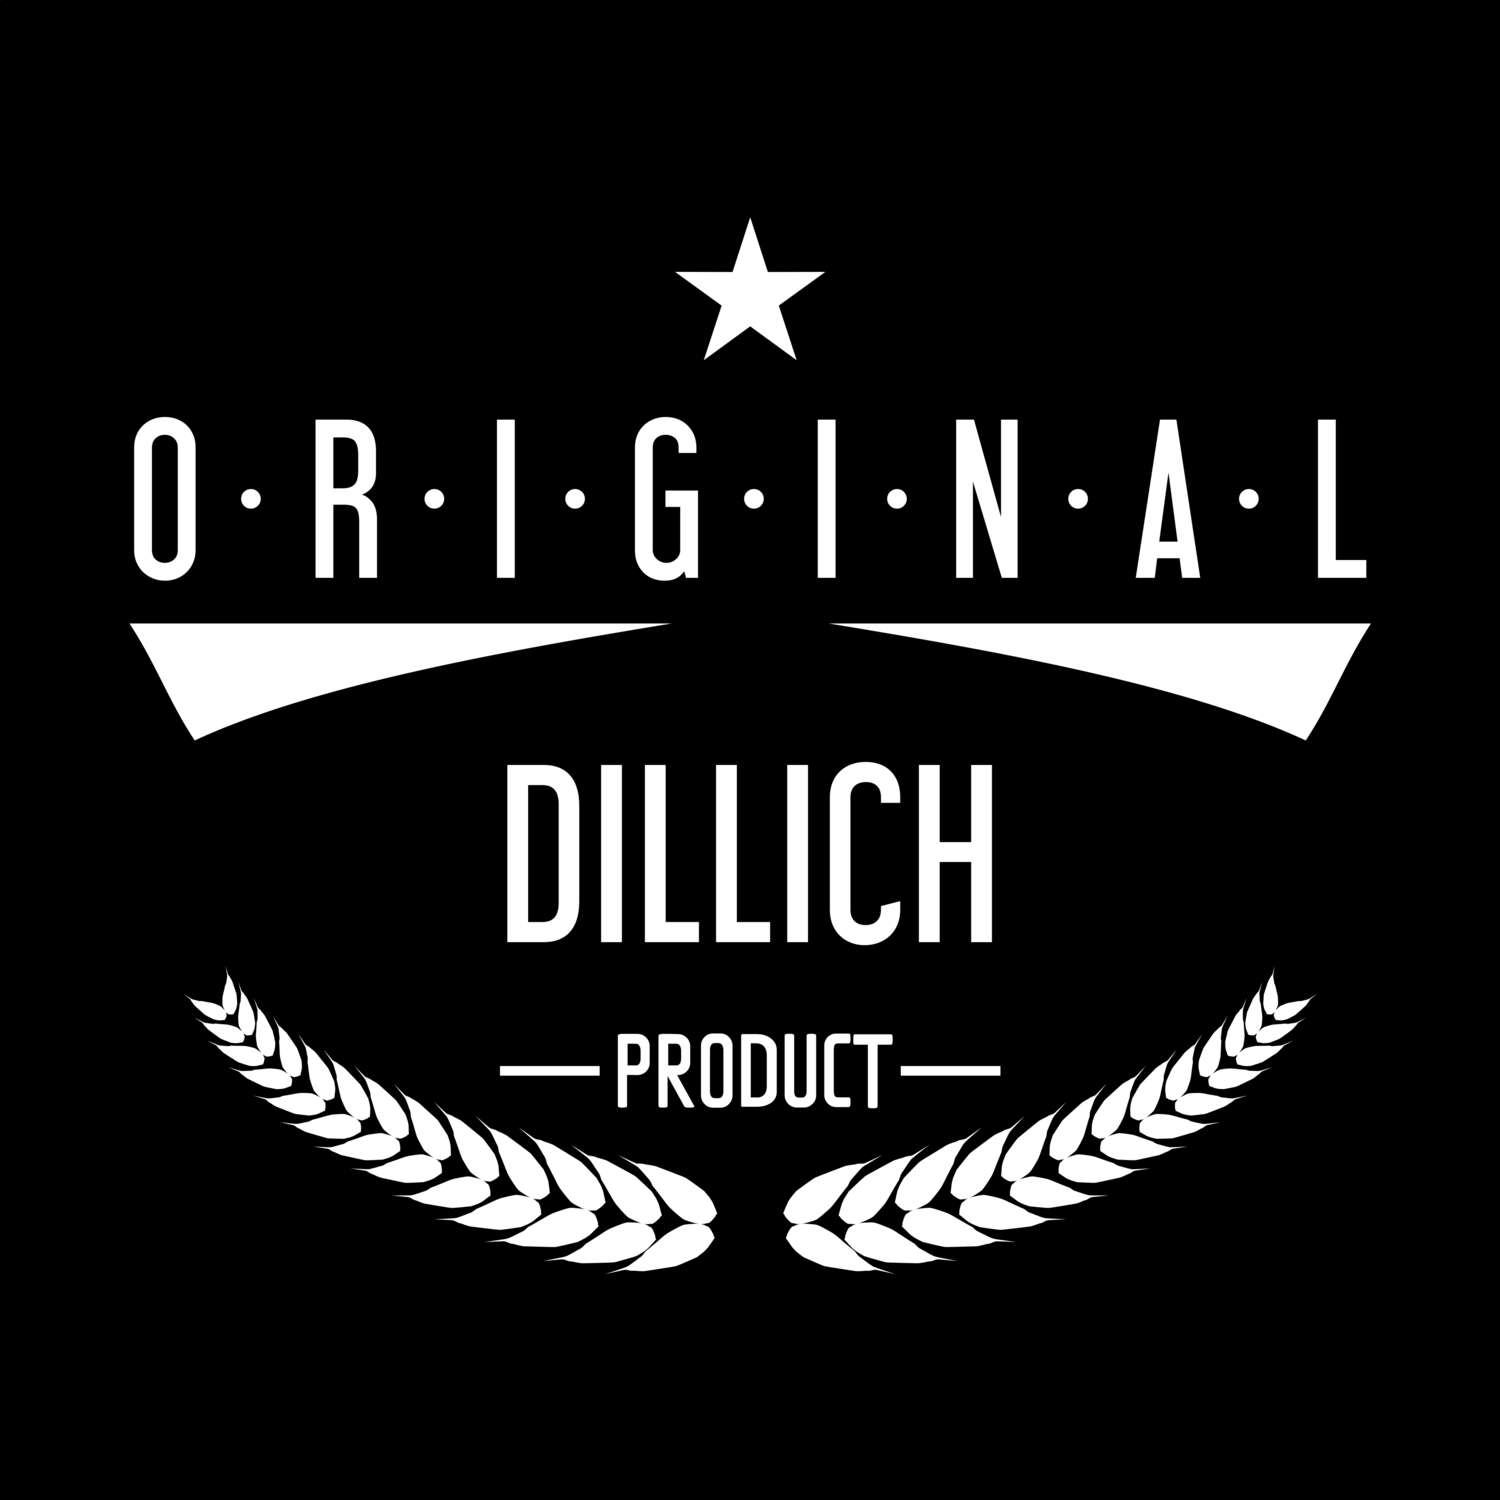 Dillich T-Shirt »Original Product«